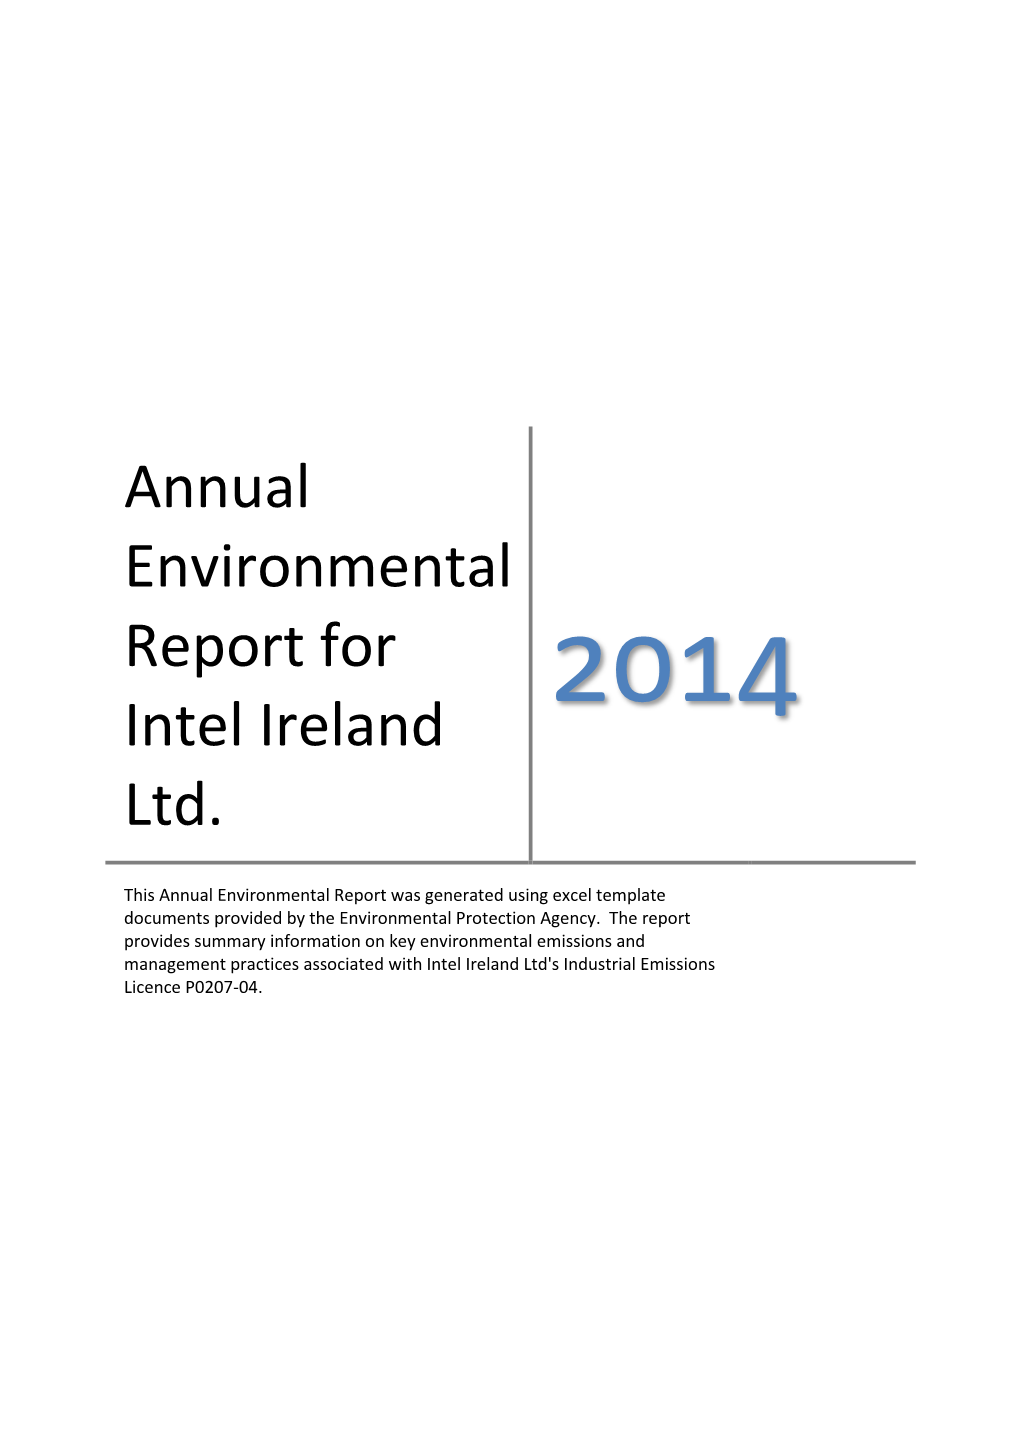 Annual Environmental Report for Intel Ireland Ltd